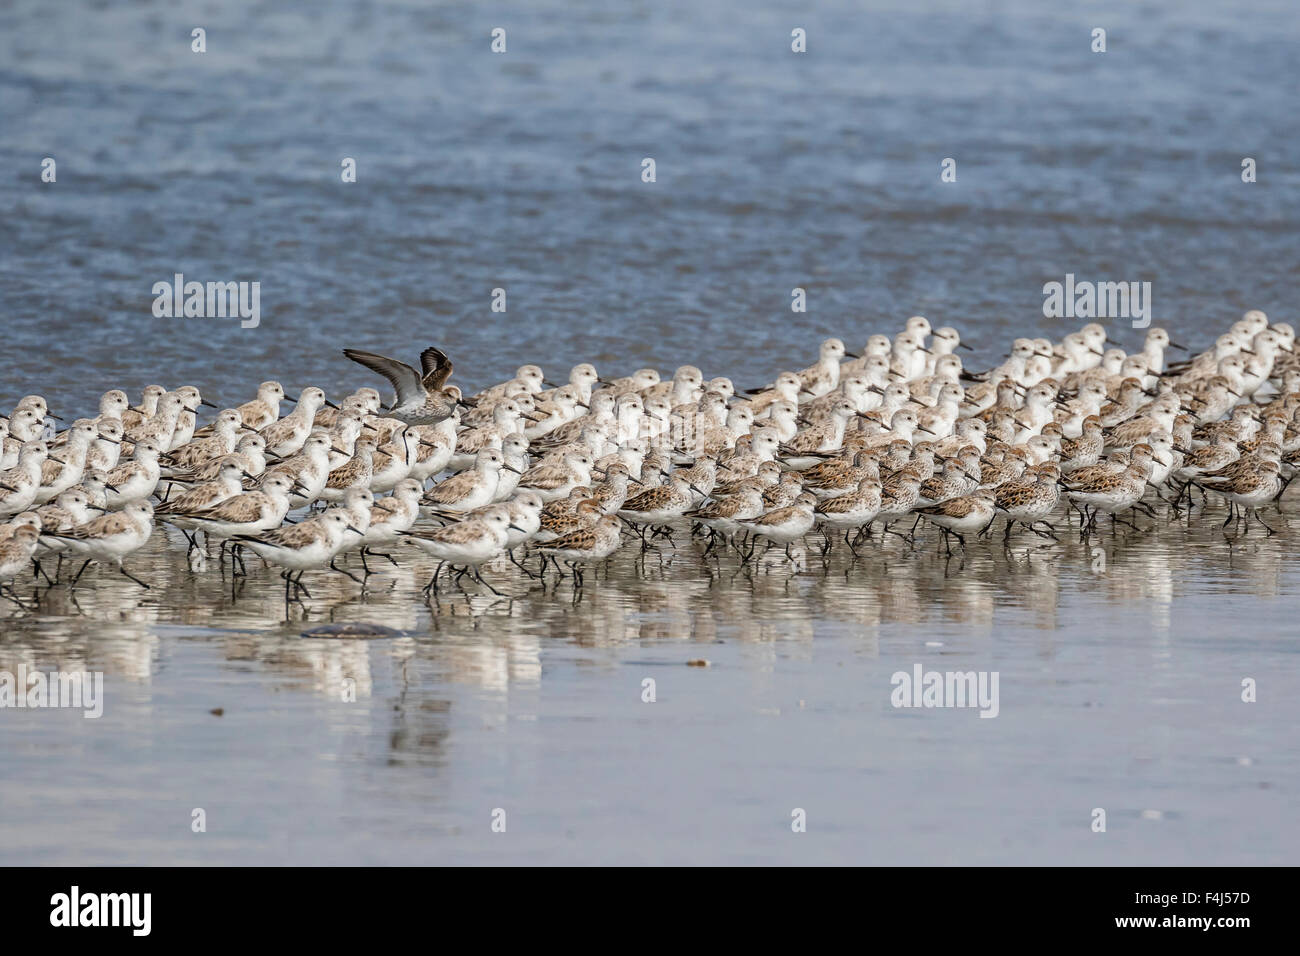 A flock of migrating sanderlings (Calidris alba), Sand Dollar Beach, Baja California Sur, Mexico, North America Stock Photo